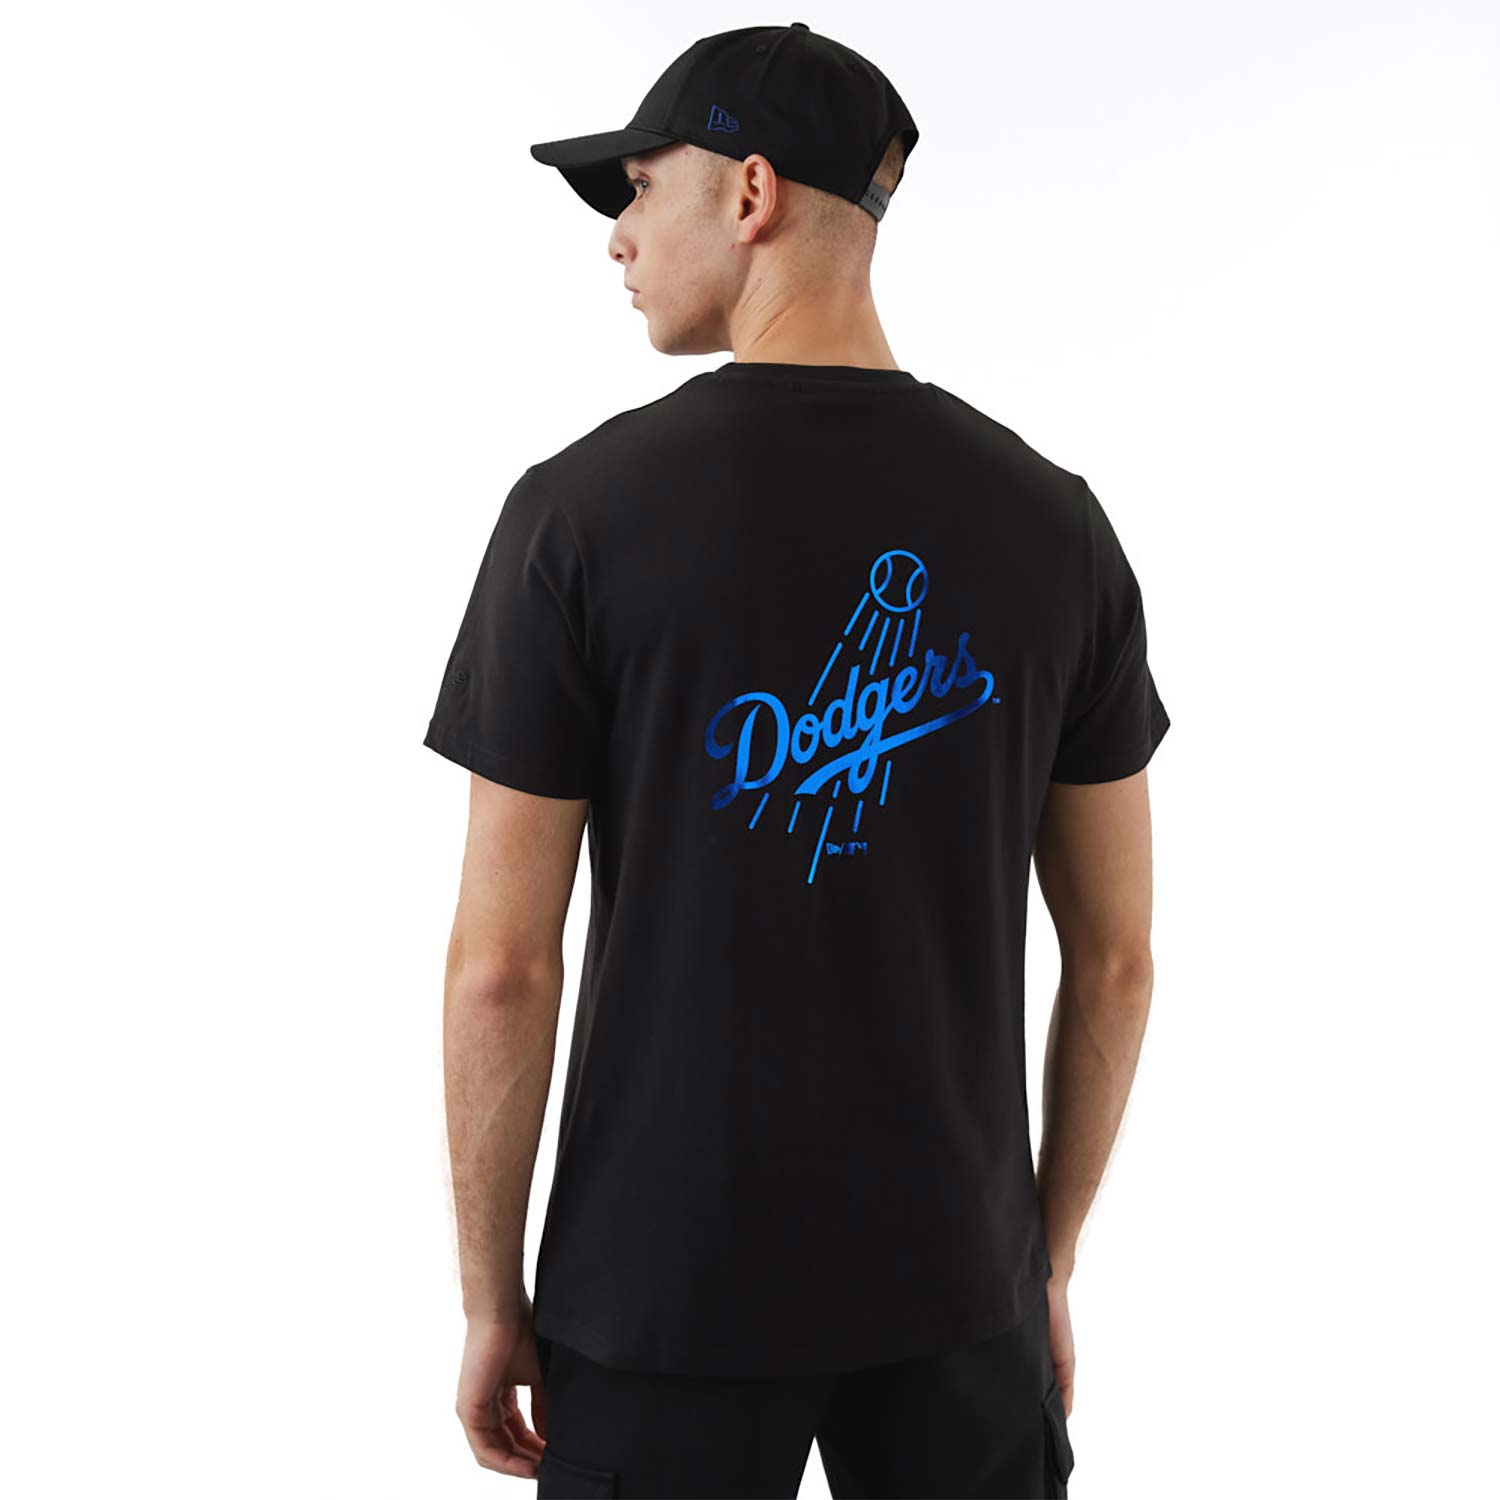 dodgers batting practice shirt